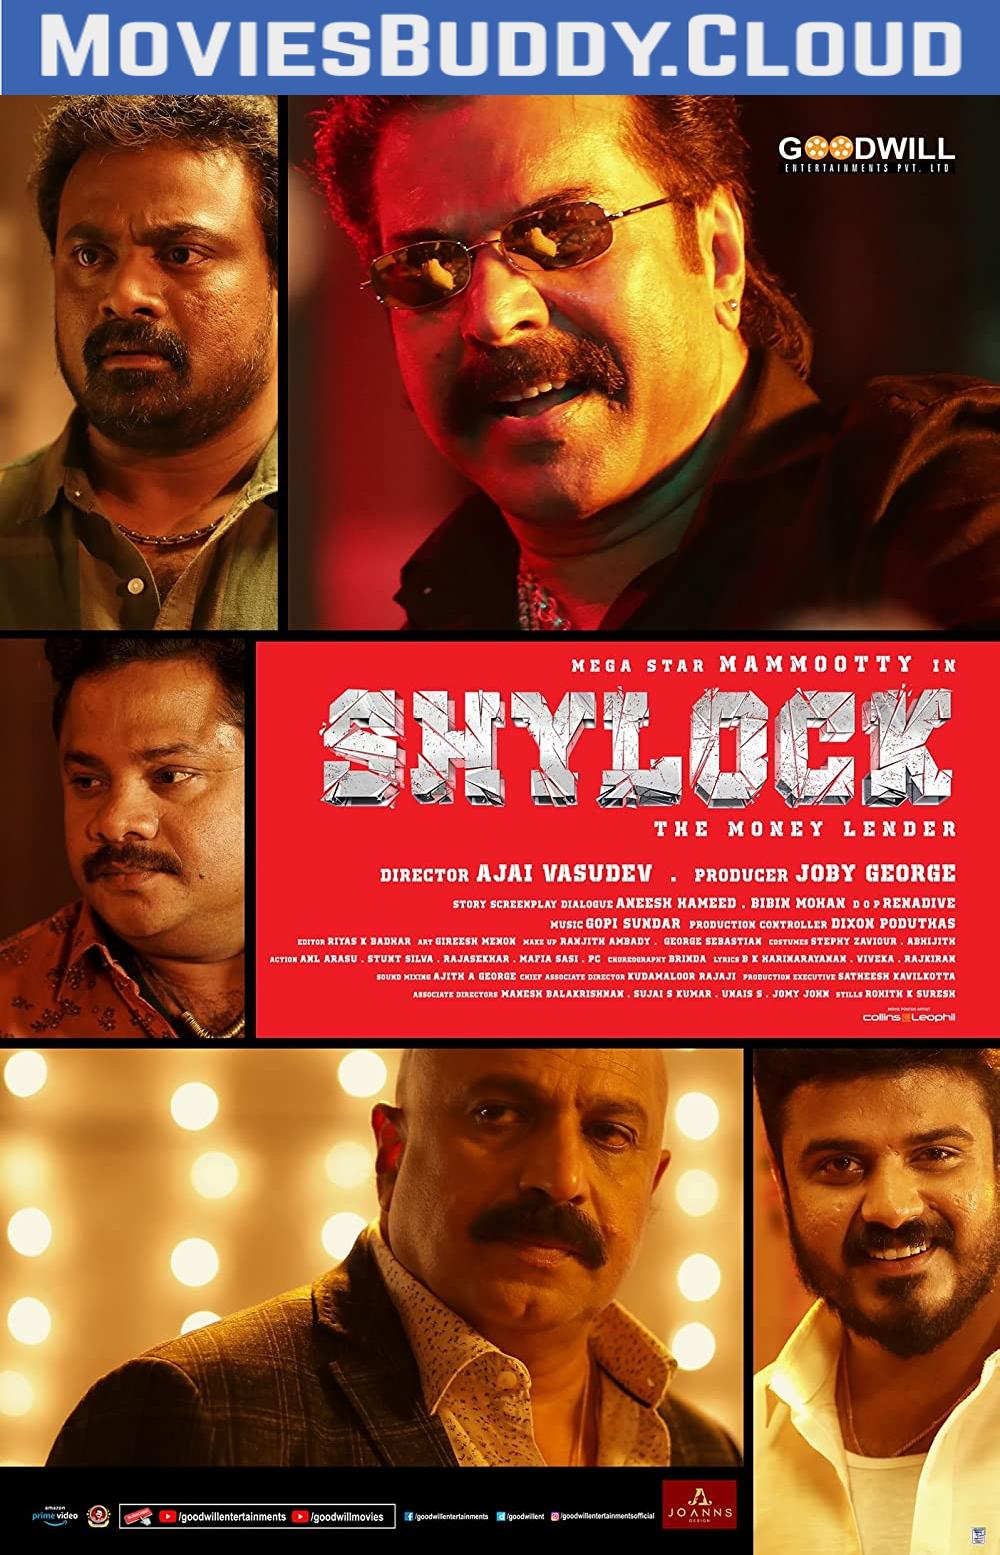 Free Download Shylock Full Movie